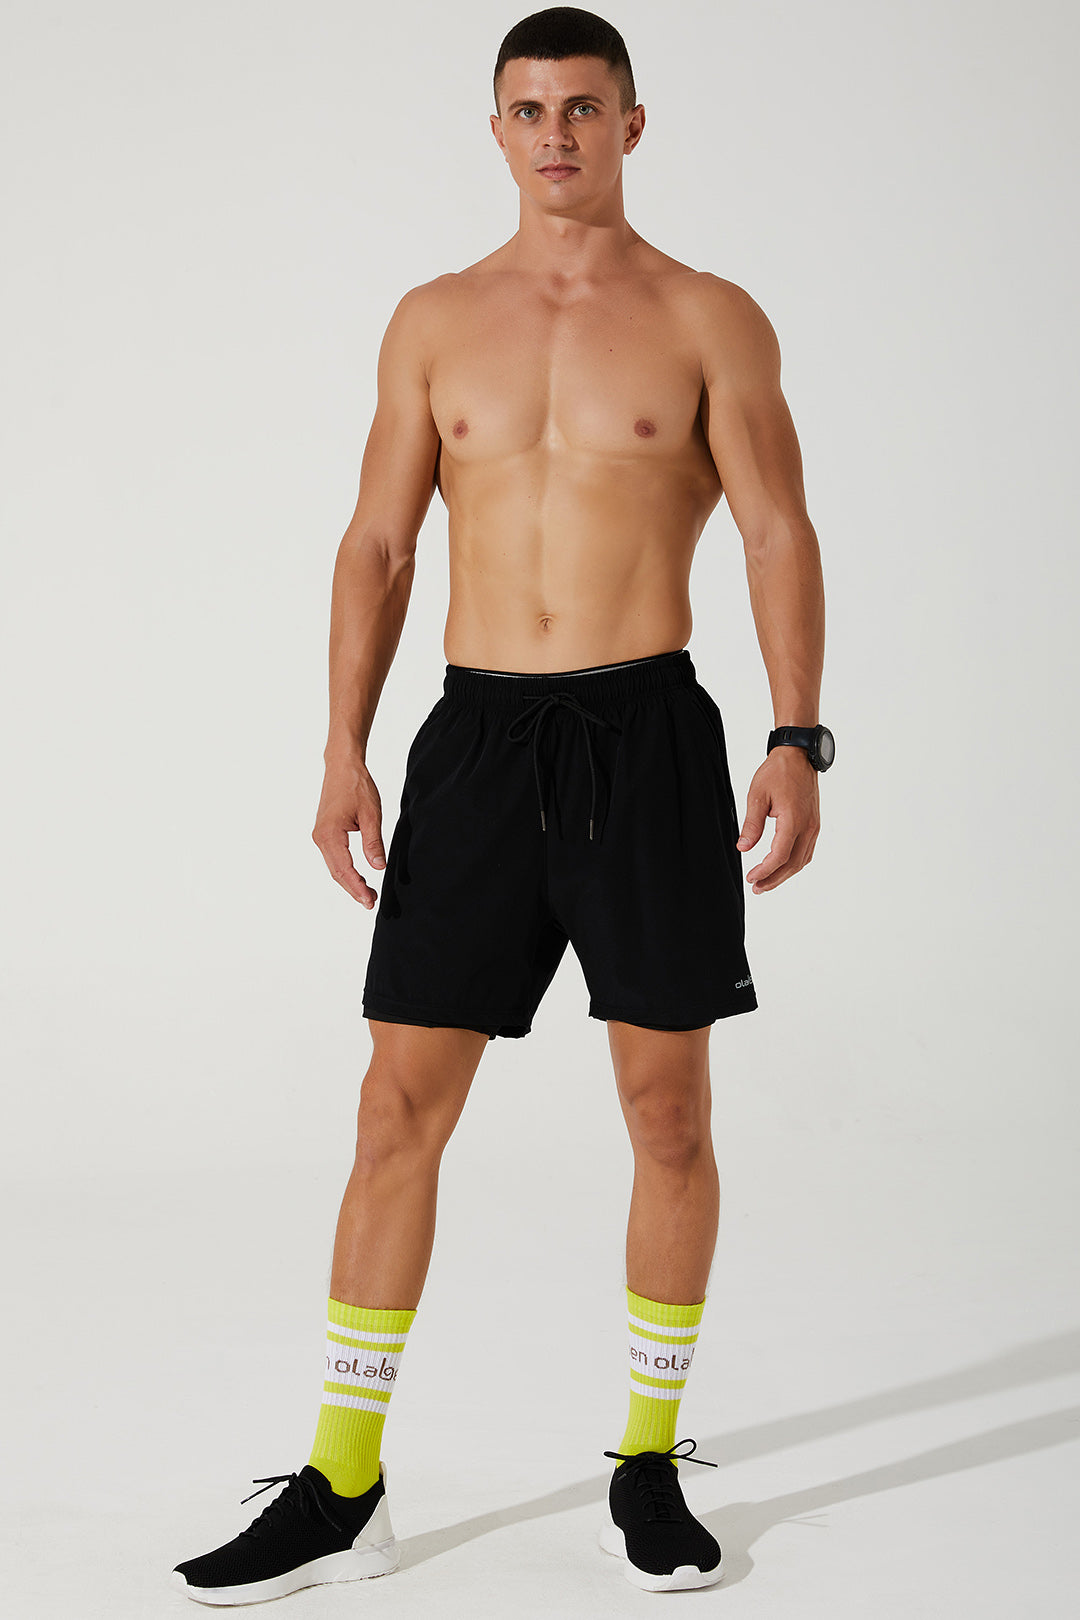 Black men's shorts with repetition pattern, Vardan 9, OW-0014-MSH-BK, image 1.